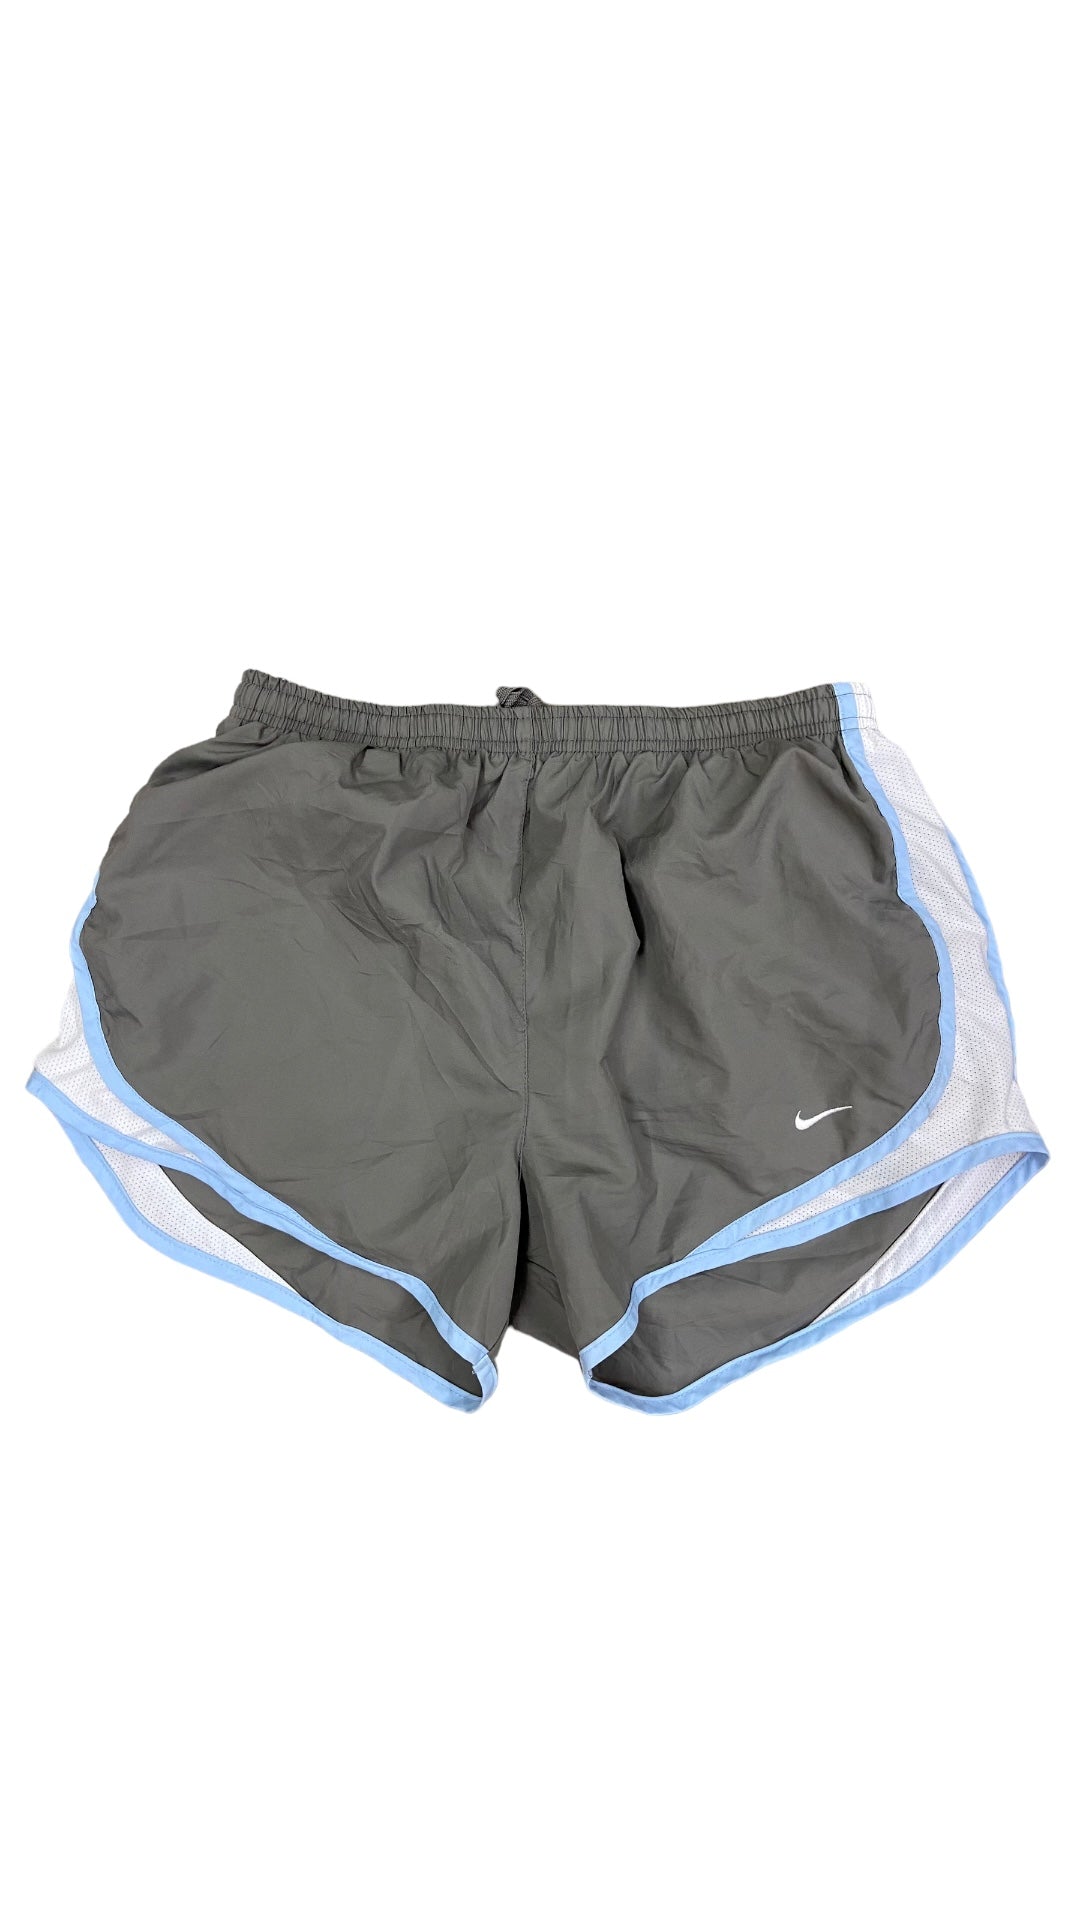 Wmns Nike Fit-Dry Grey/Blue Running Shorts Sz M